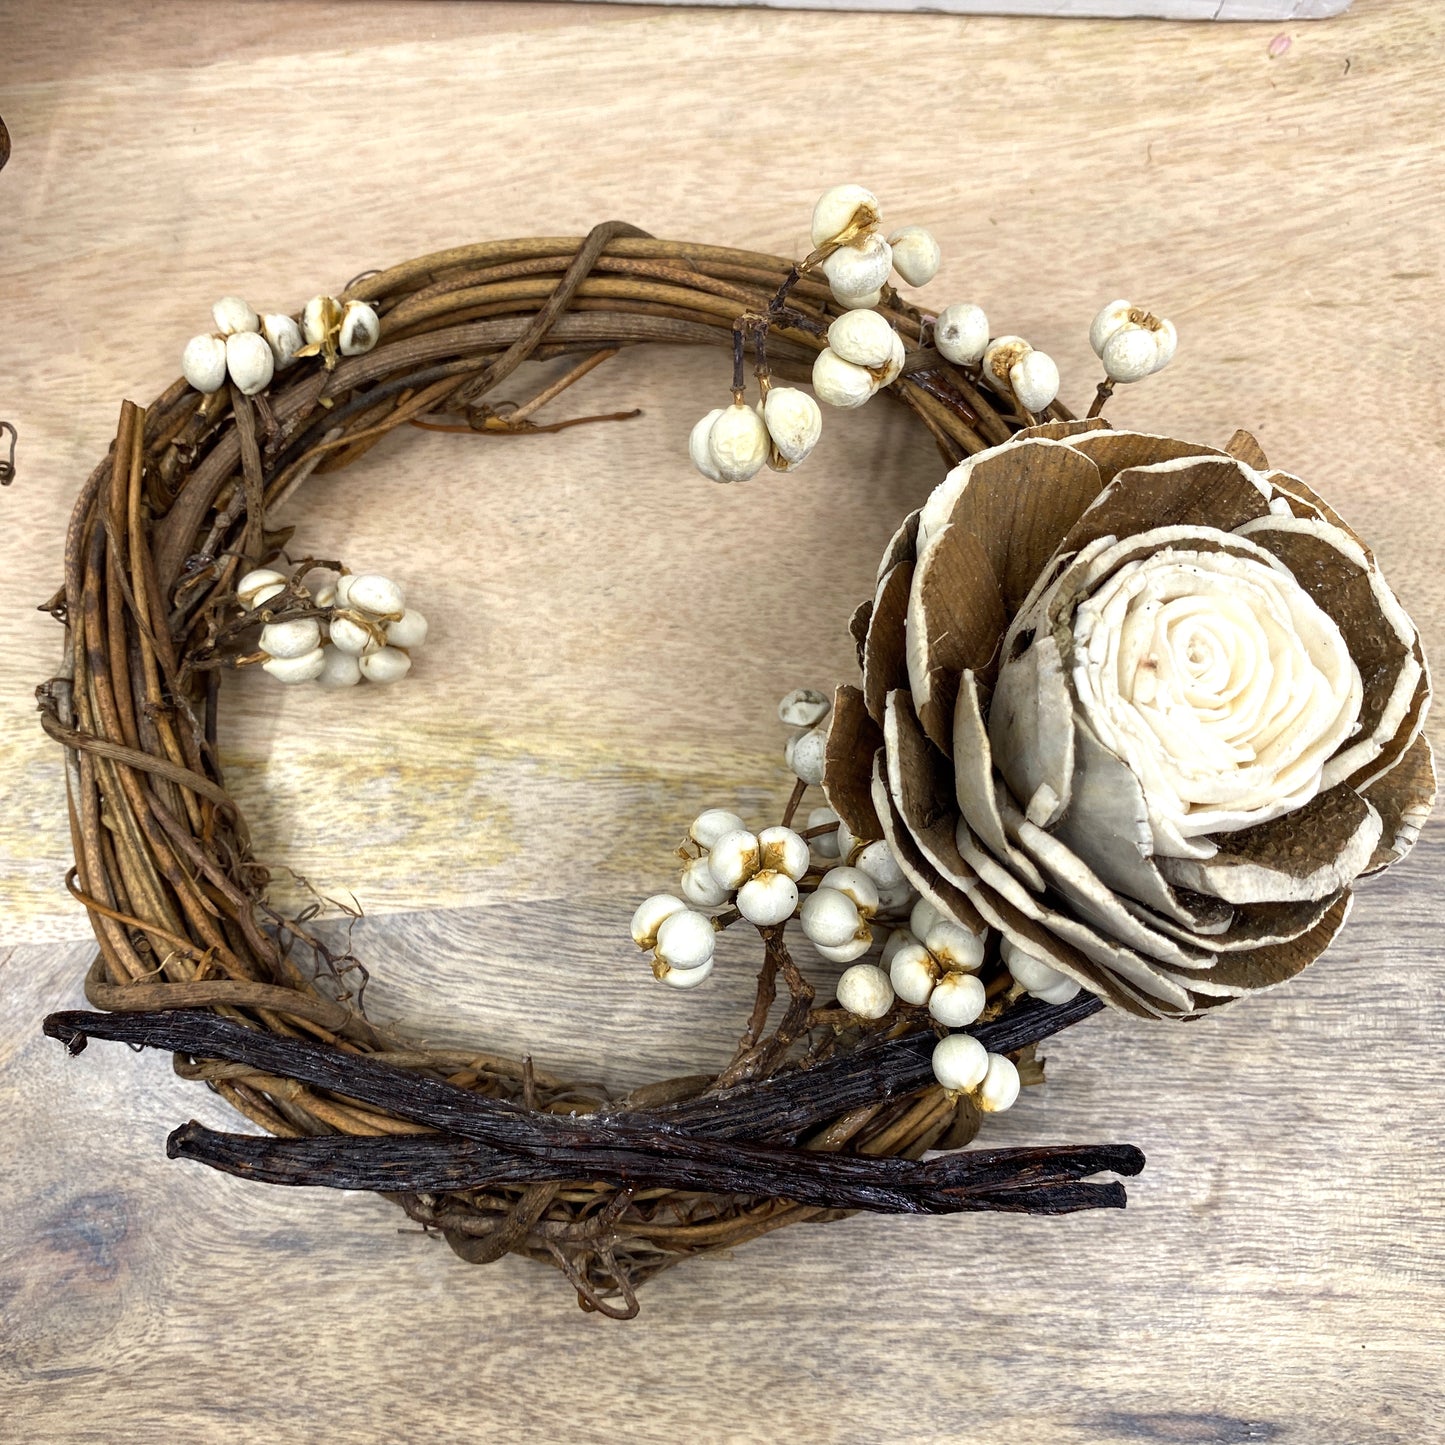 Vanilla Bean, Grapevine Wreath Ornaments with Dried Flowers, 6” Sunsum®